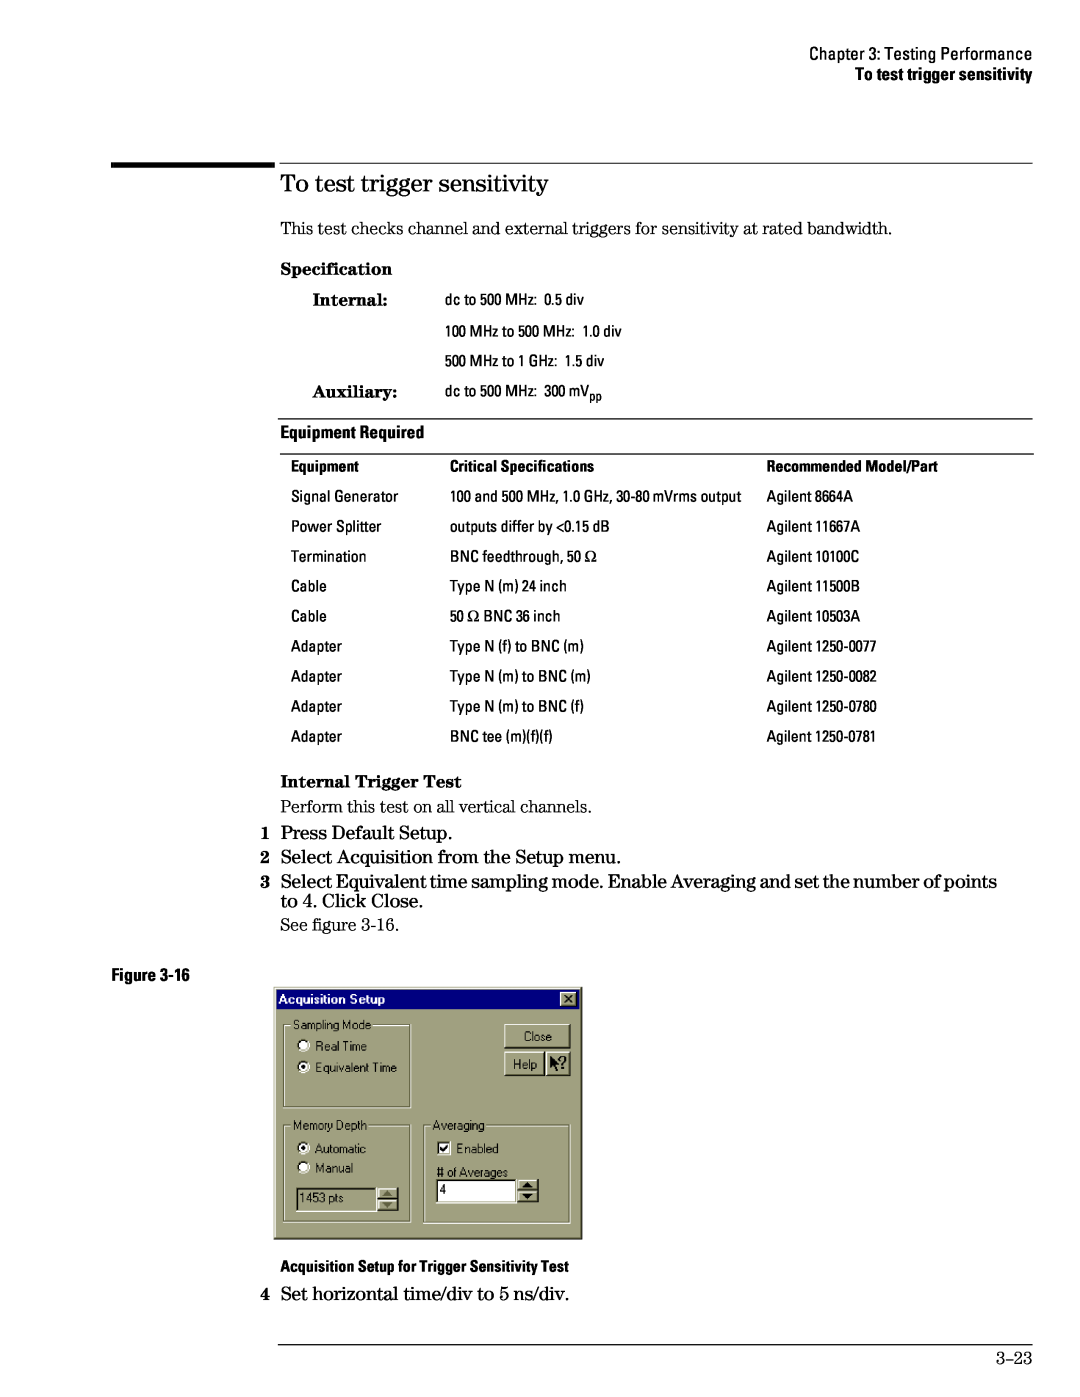 Agilent Technologies 45A, 46A To test trigger sensitivity, Press Default Setup 2 Select Acquisition from the Setup menu 